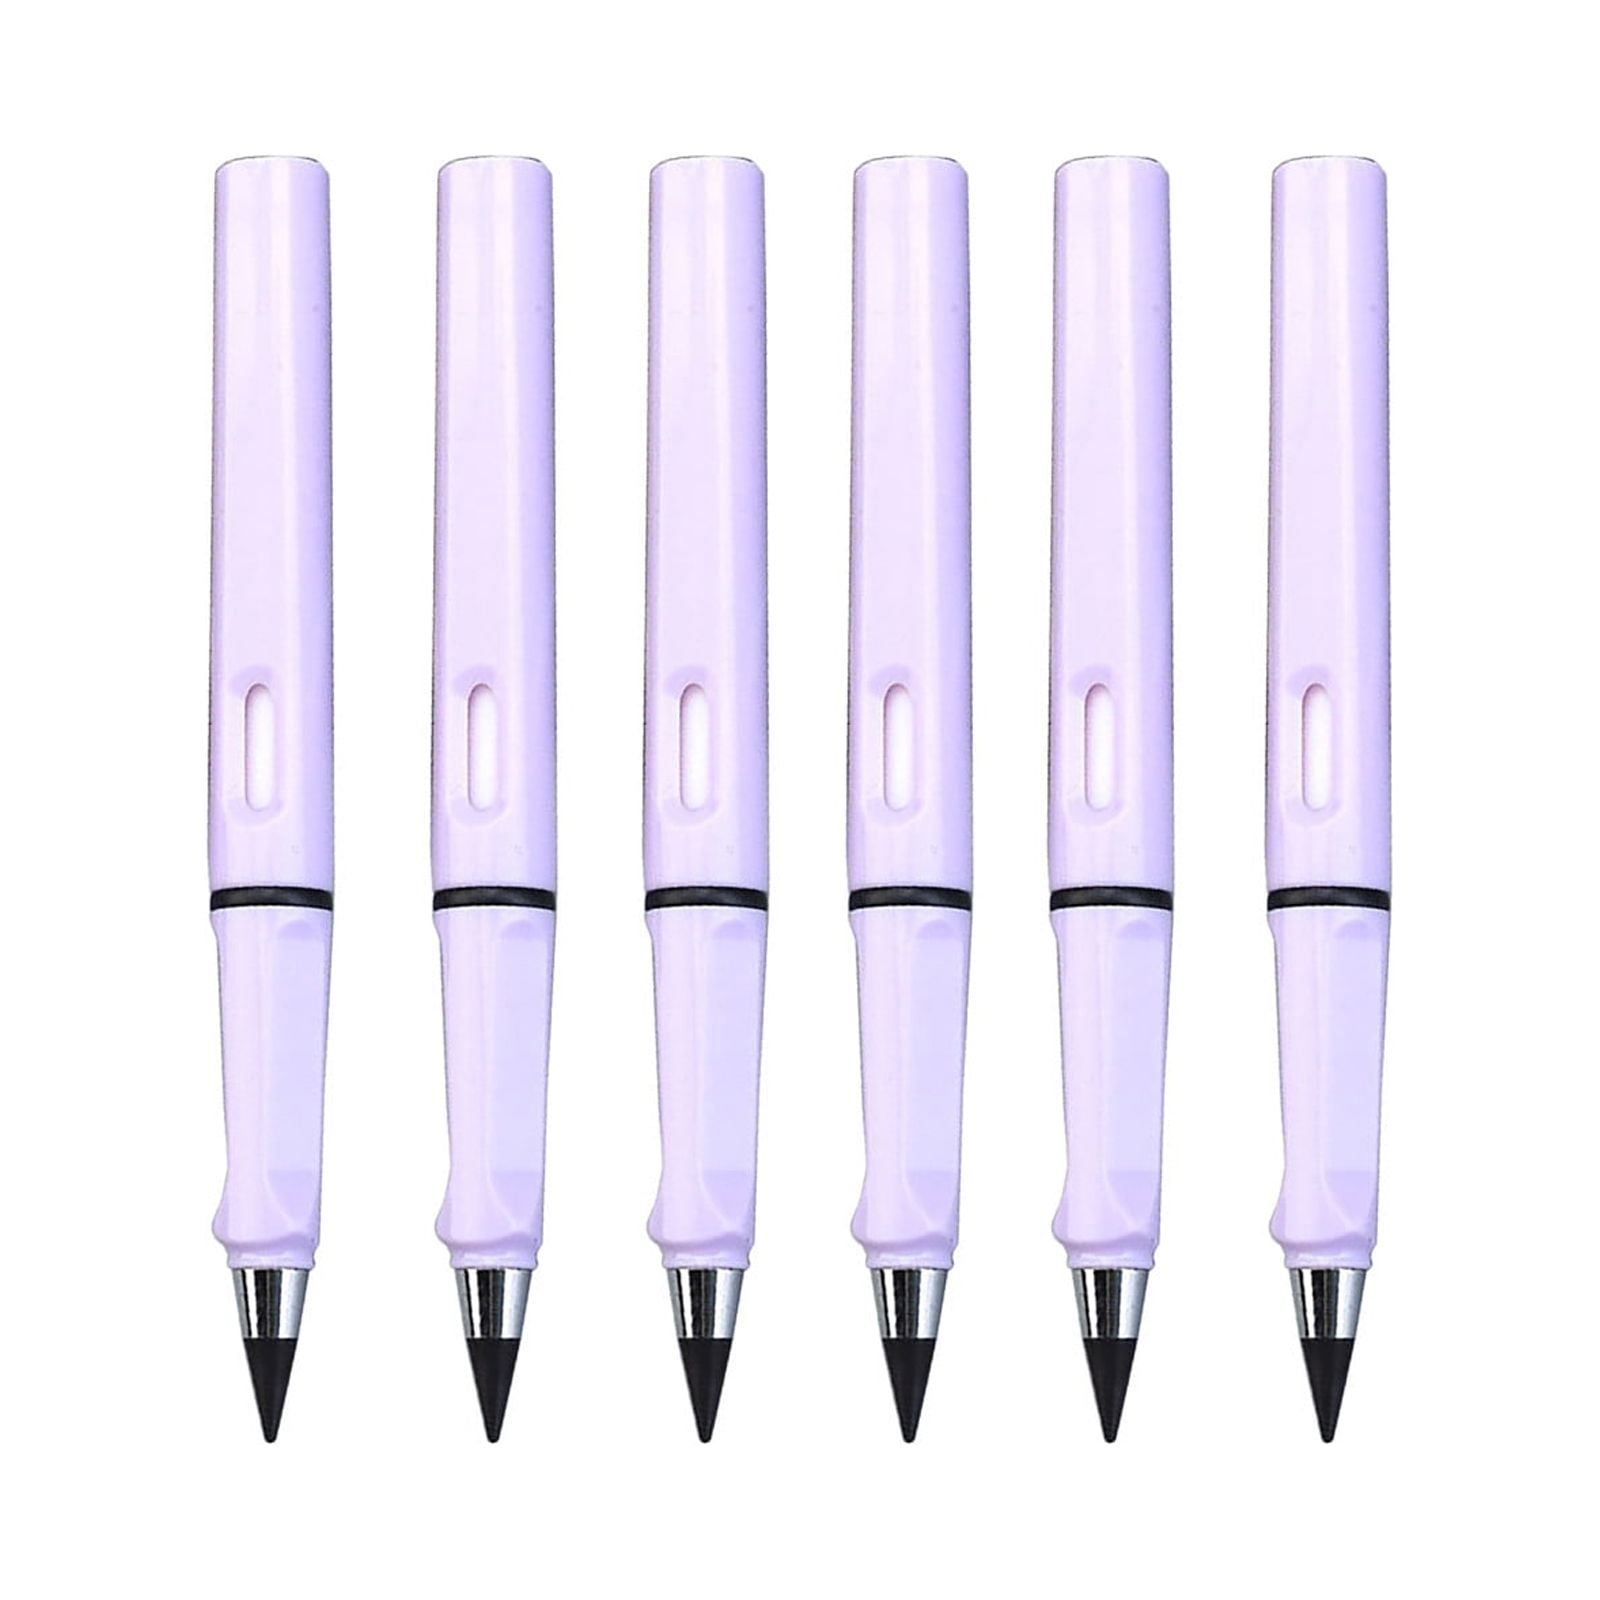 Vikakiooze Back to School Supplies, Grip Posture Correction Design Pencil Without Ink, Old Undead Pen, Creative Metal Pen, Blue